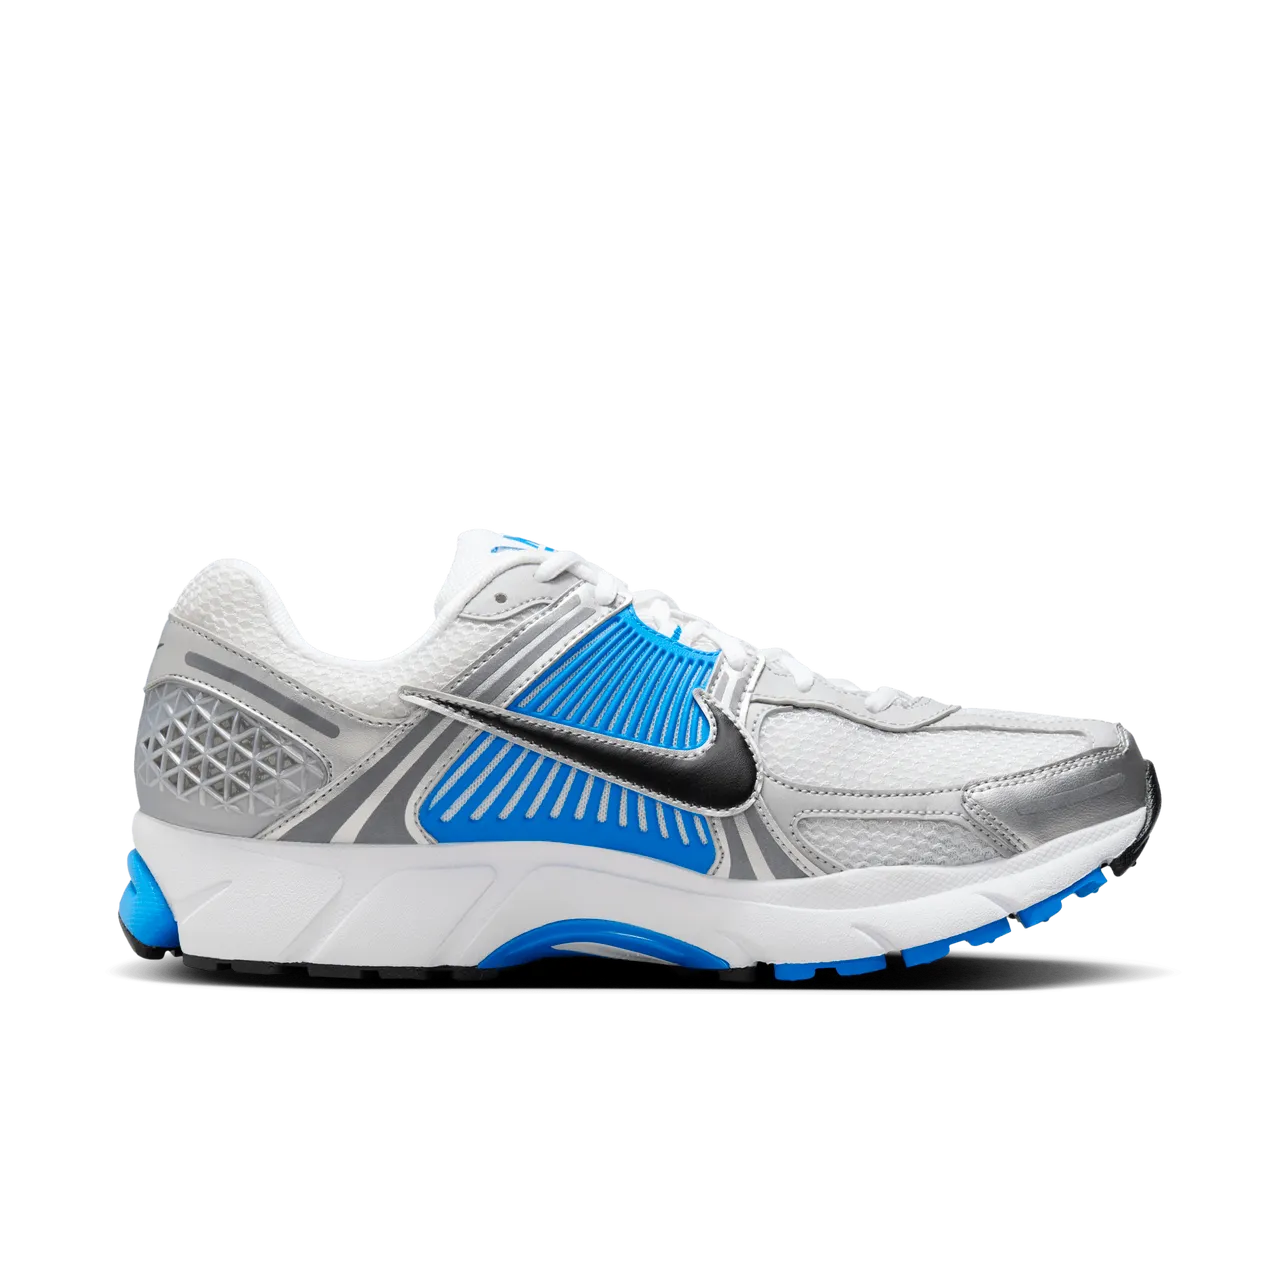 Nike Zoom Vomero 5 Men's Shoes - White - Leather